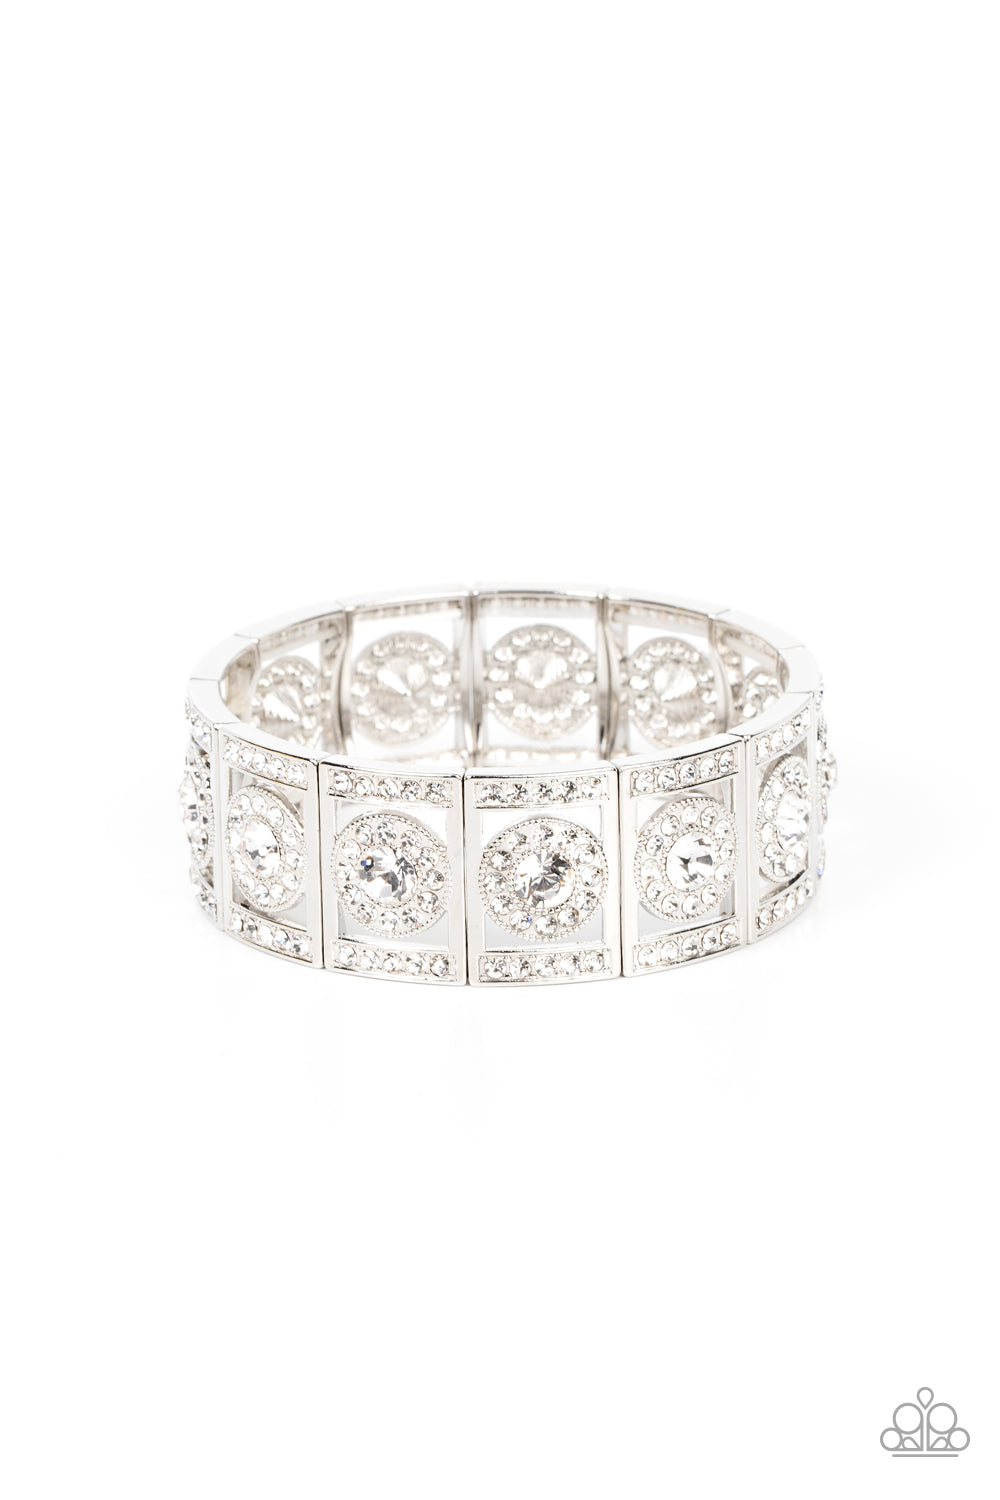  ring of glitzy white rhinestones inside a rectangular silver frame dusted in dazzling white rhinestones